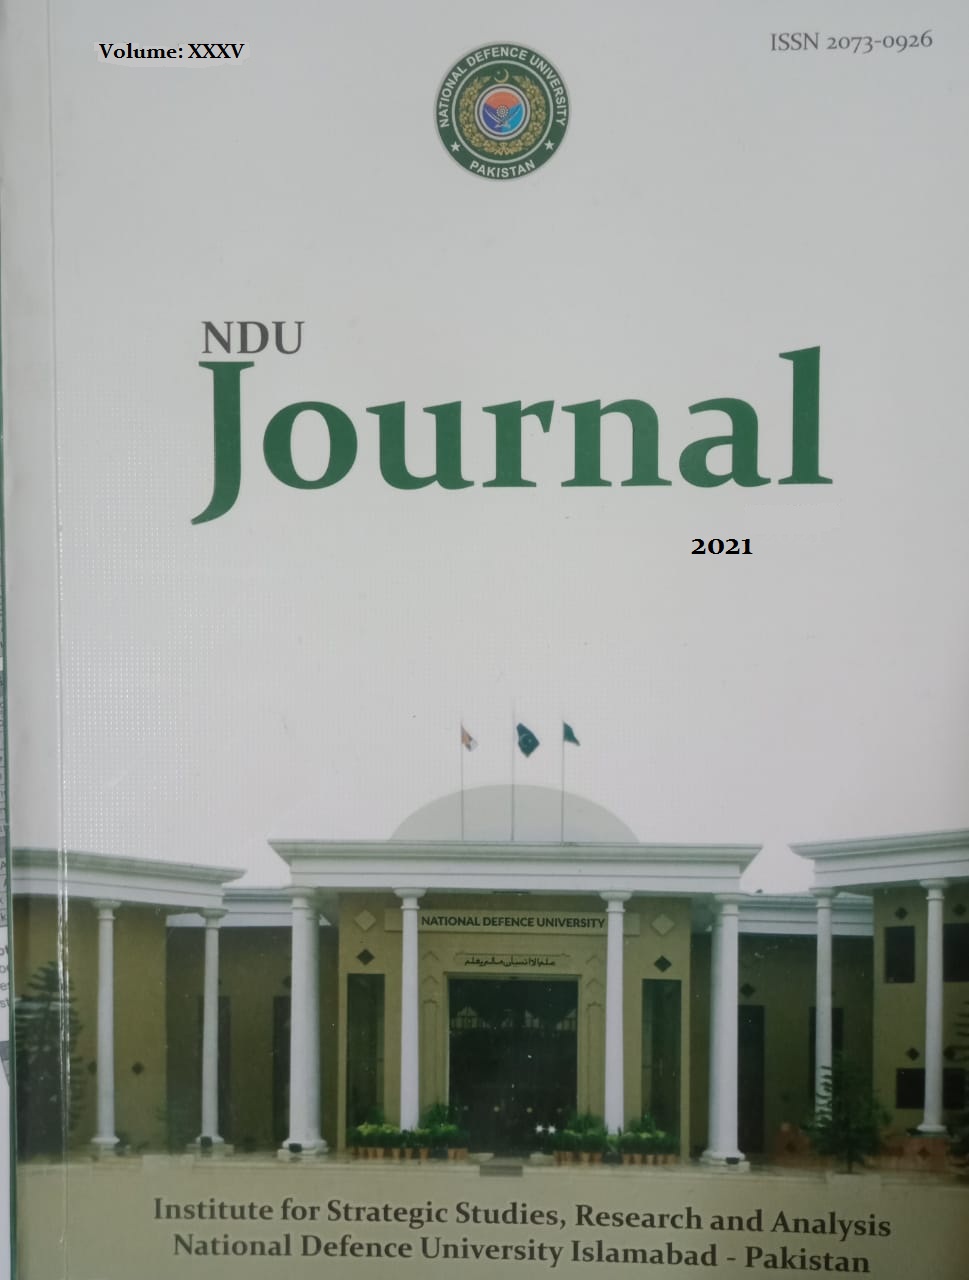 					View Vol. 1 No. 35 (2021): NDU Journal
				